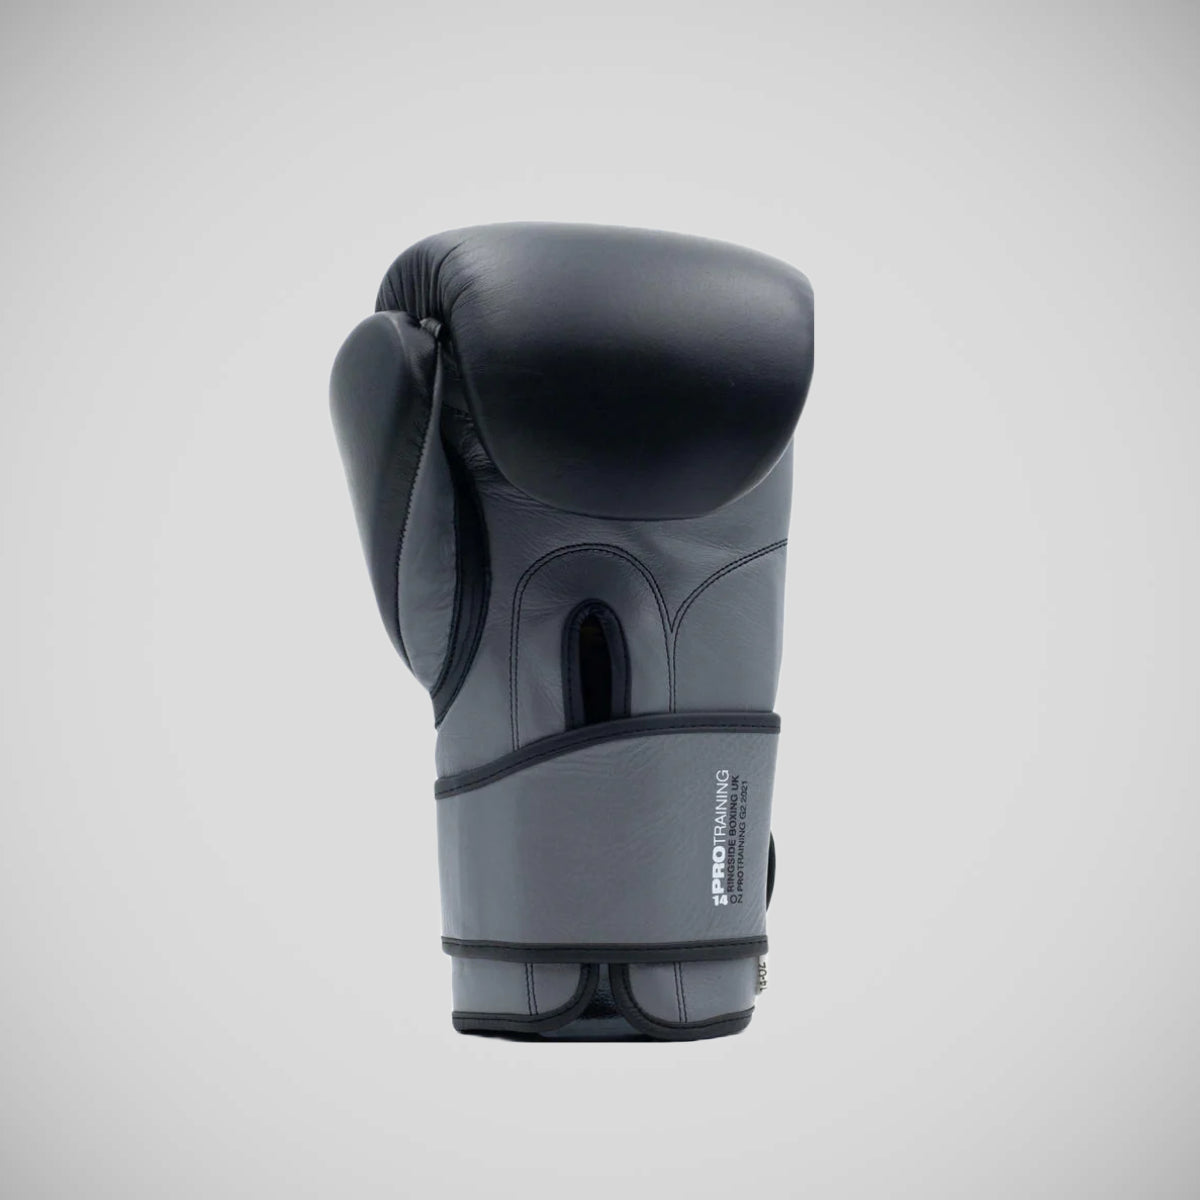 Black/Grey Ringside Pro Training G2 Boxing Gloves